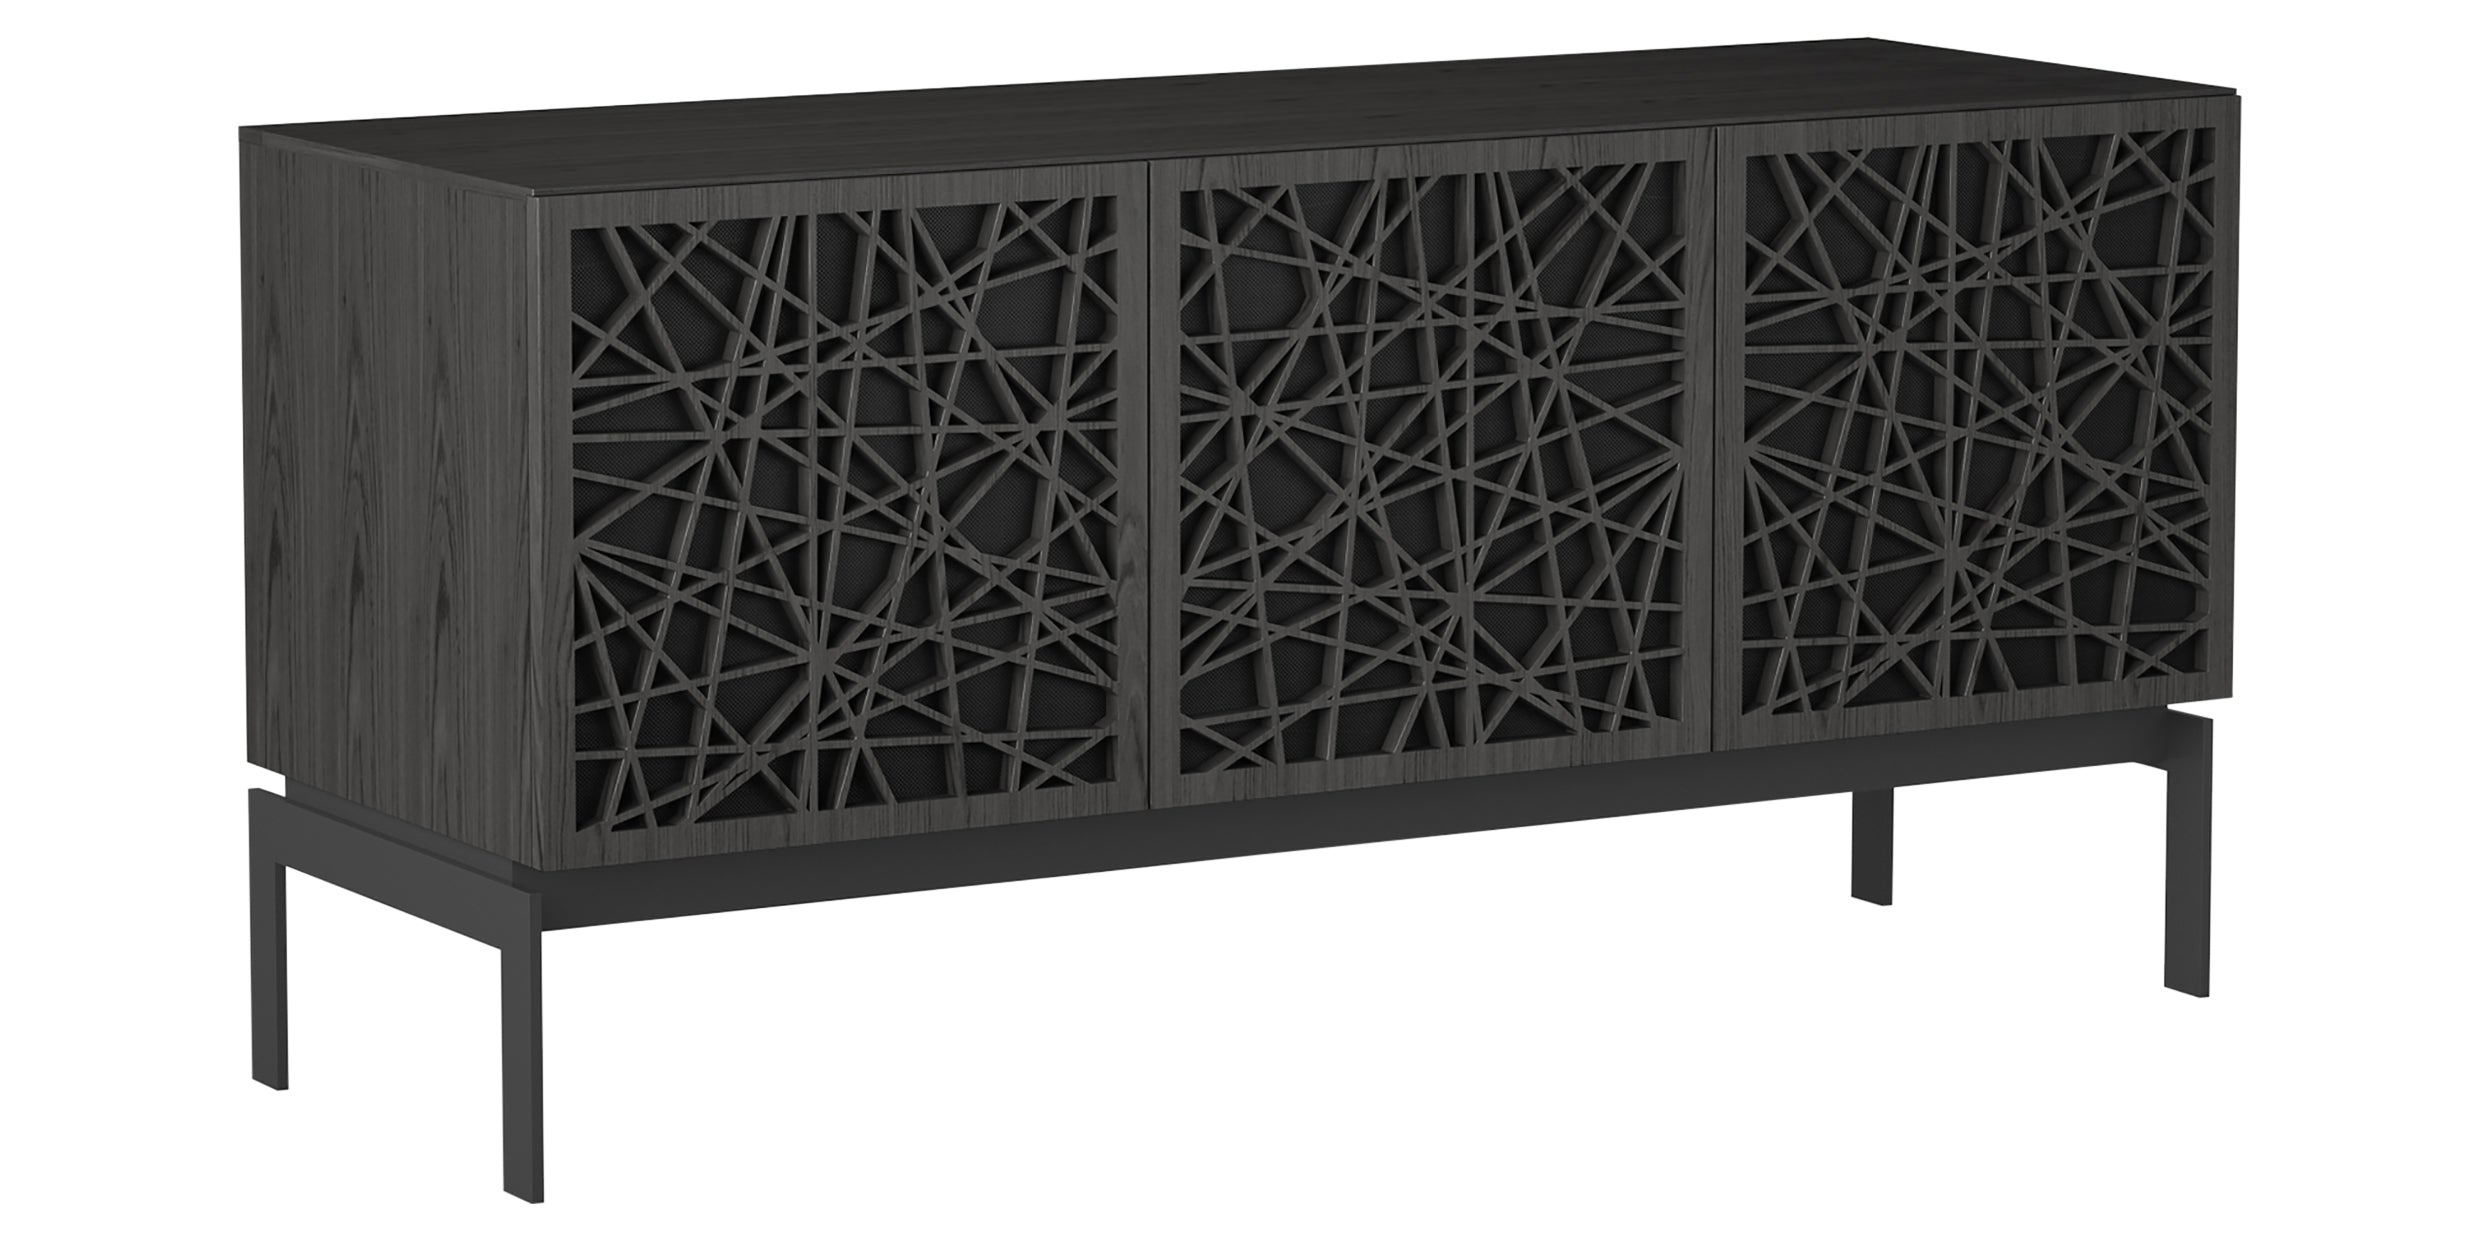 Charcoal Ash Veneer &amp; Black Perforated Steel with Black Steel (Ricochet) | BDI Elements 3 Door Storage Cabinet | Valley Ridge Furniture